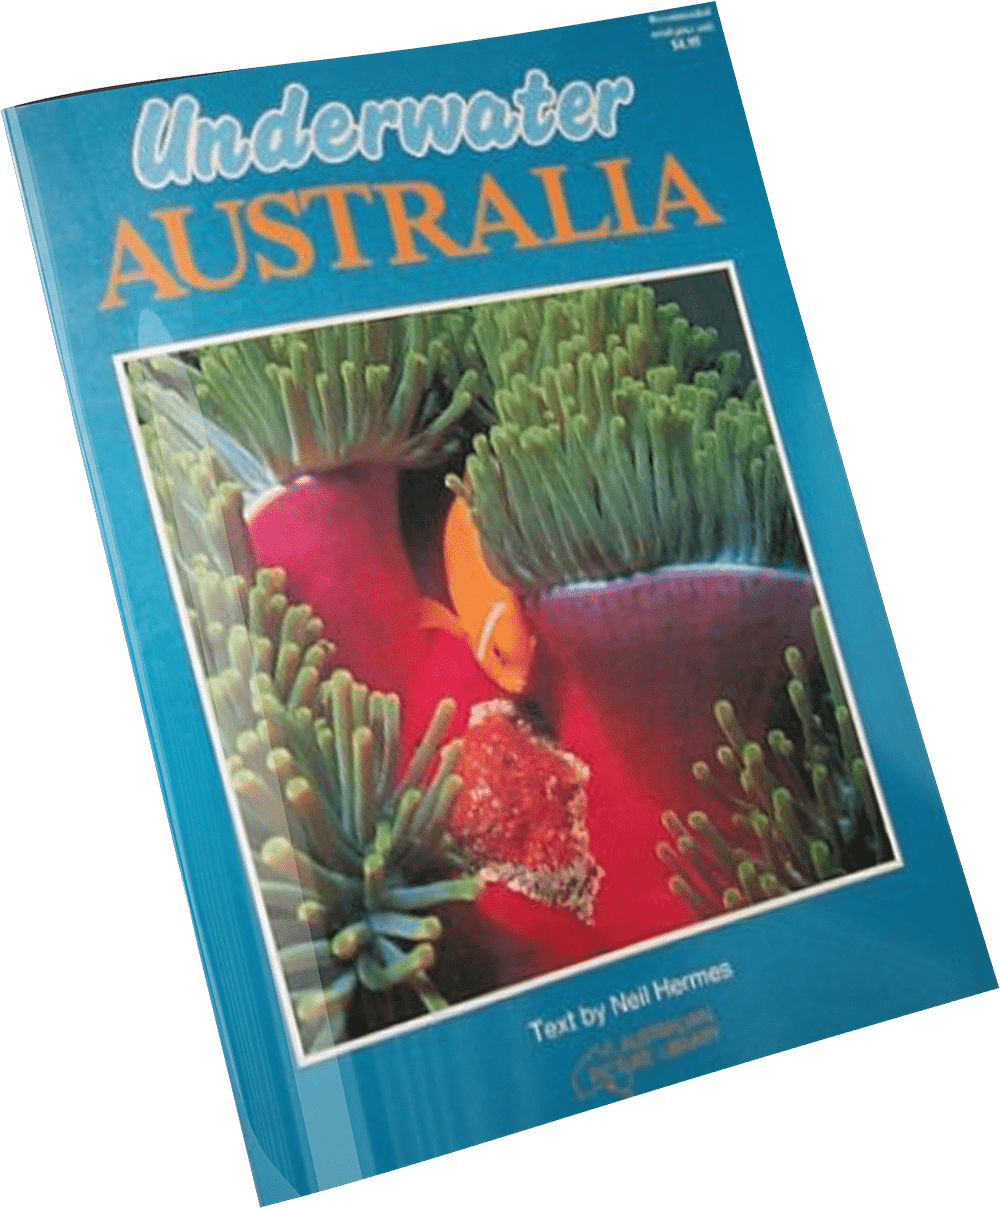 Neil Hermes Book: Underwater Australia